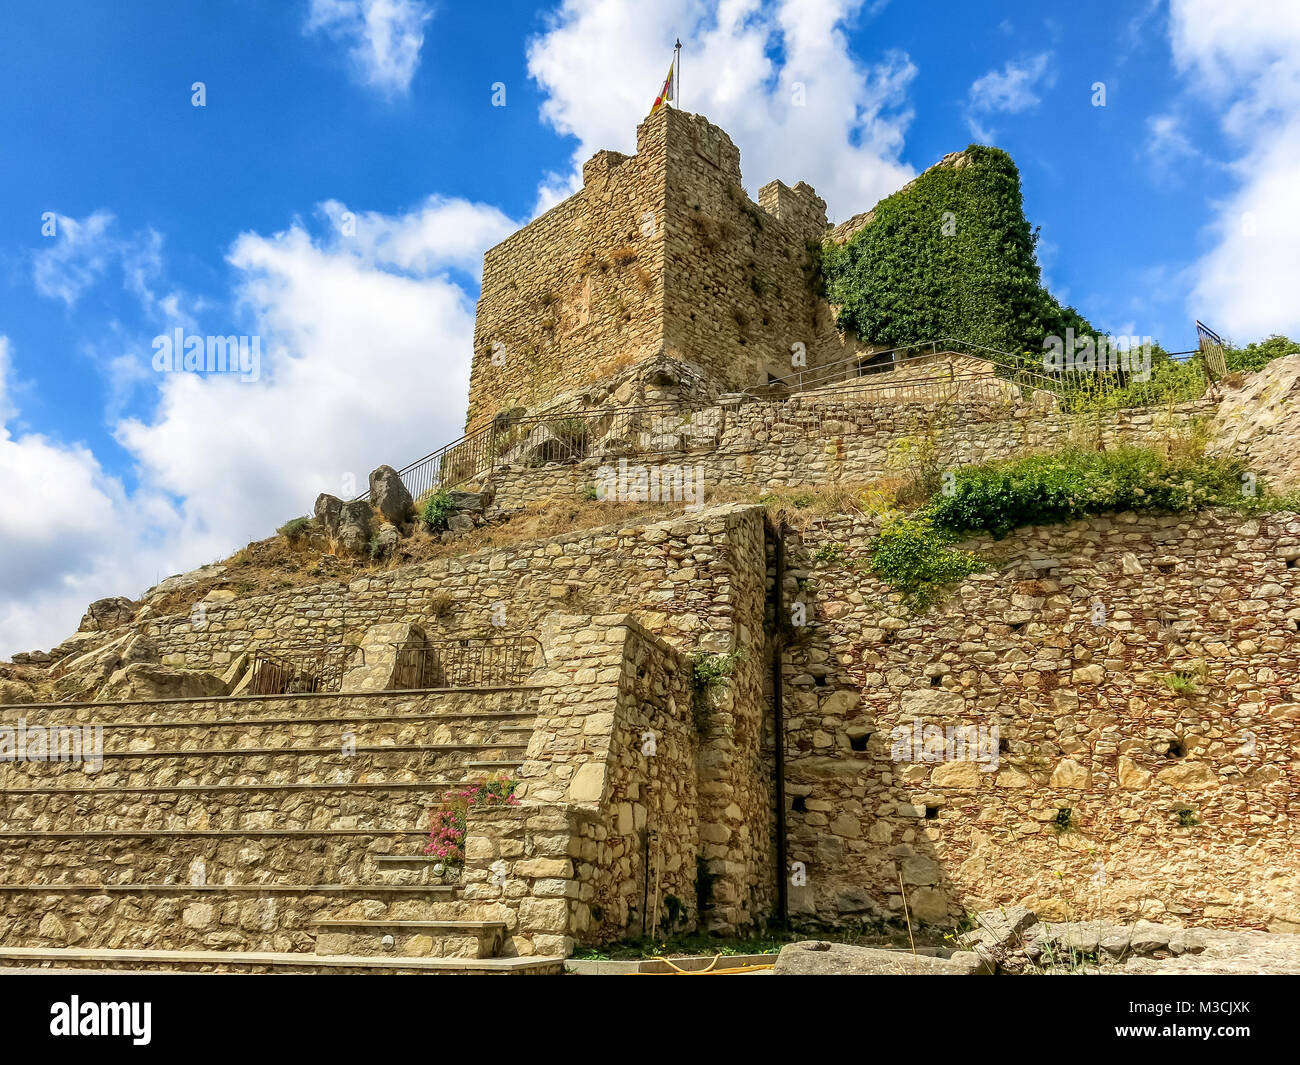 The castle of Montalbano Elicona, Sicily, Italy. Stock Photo